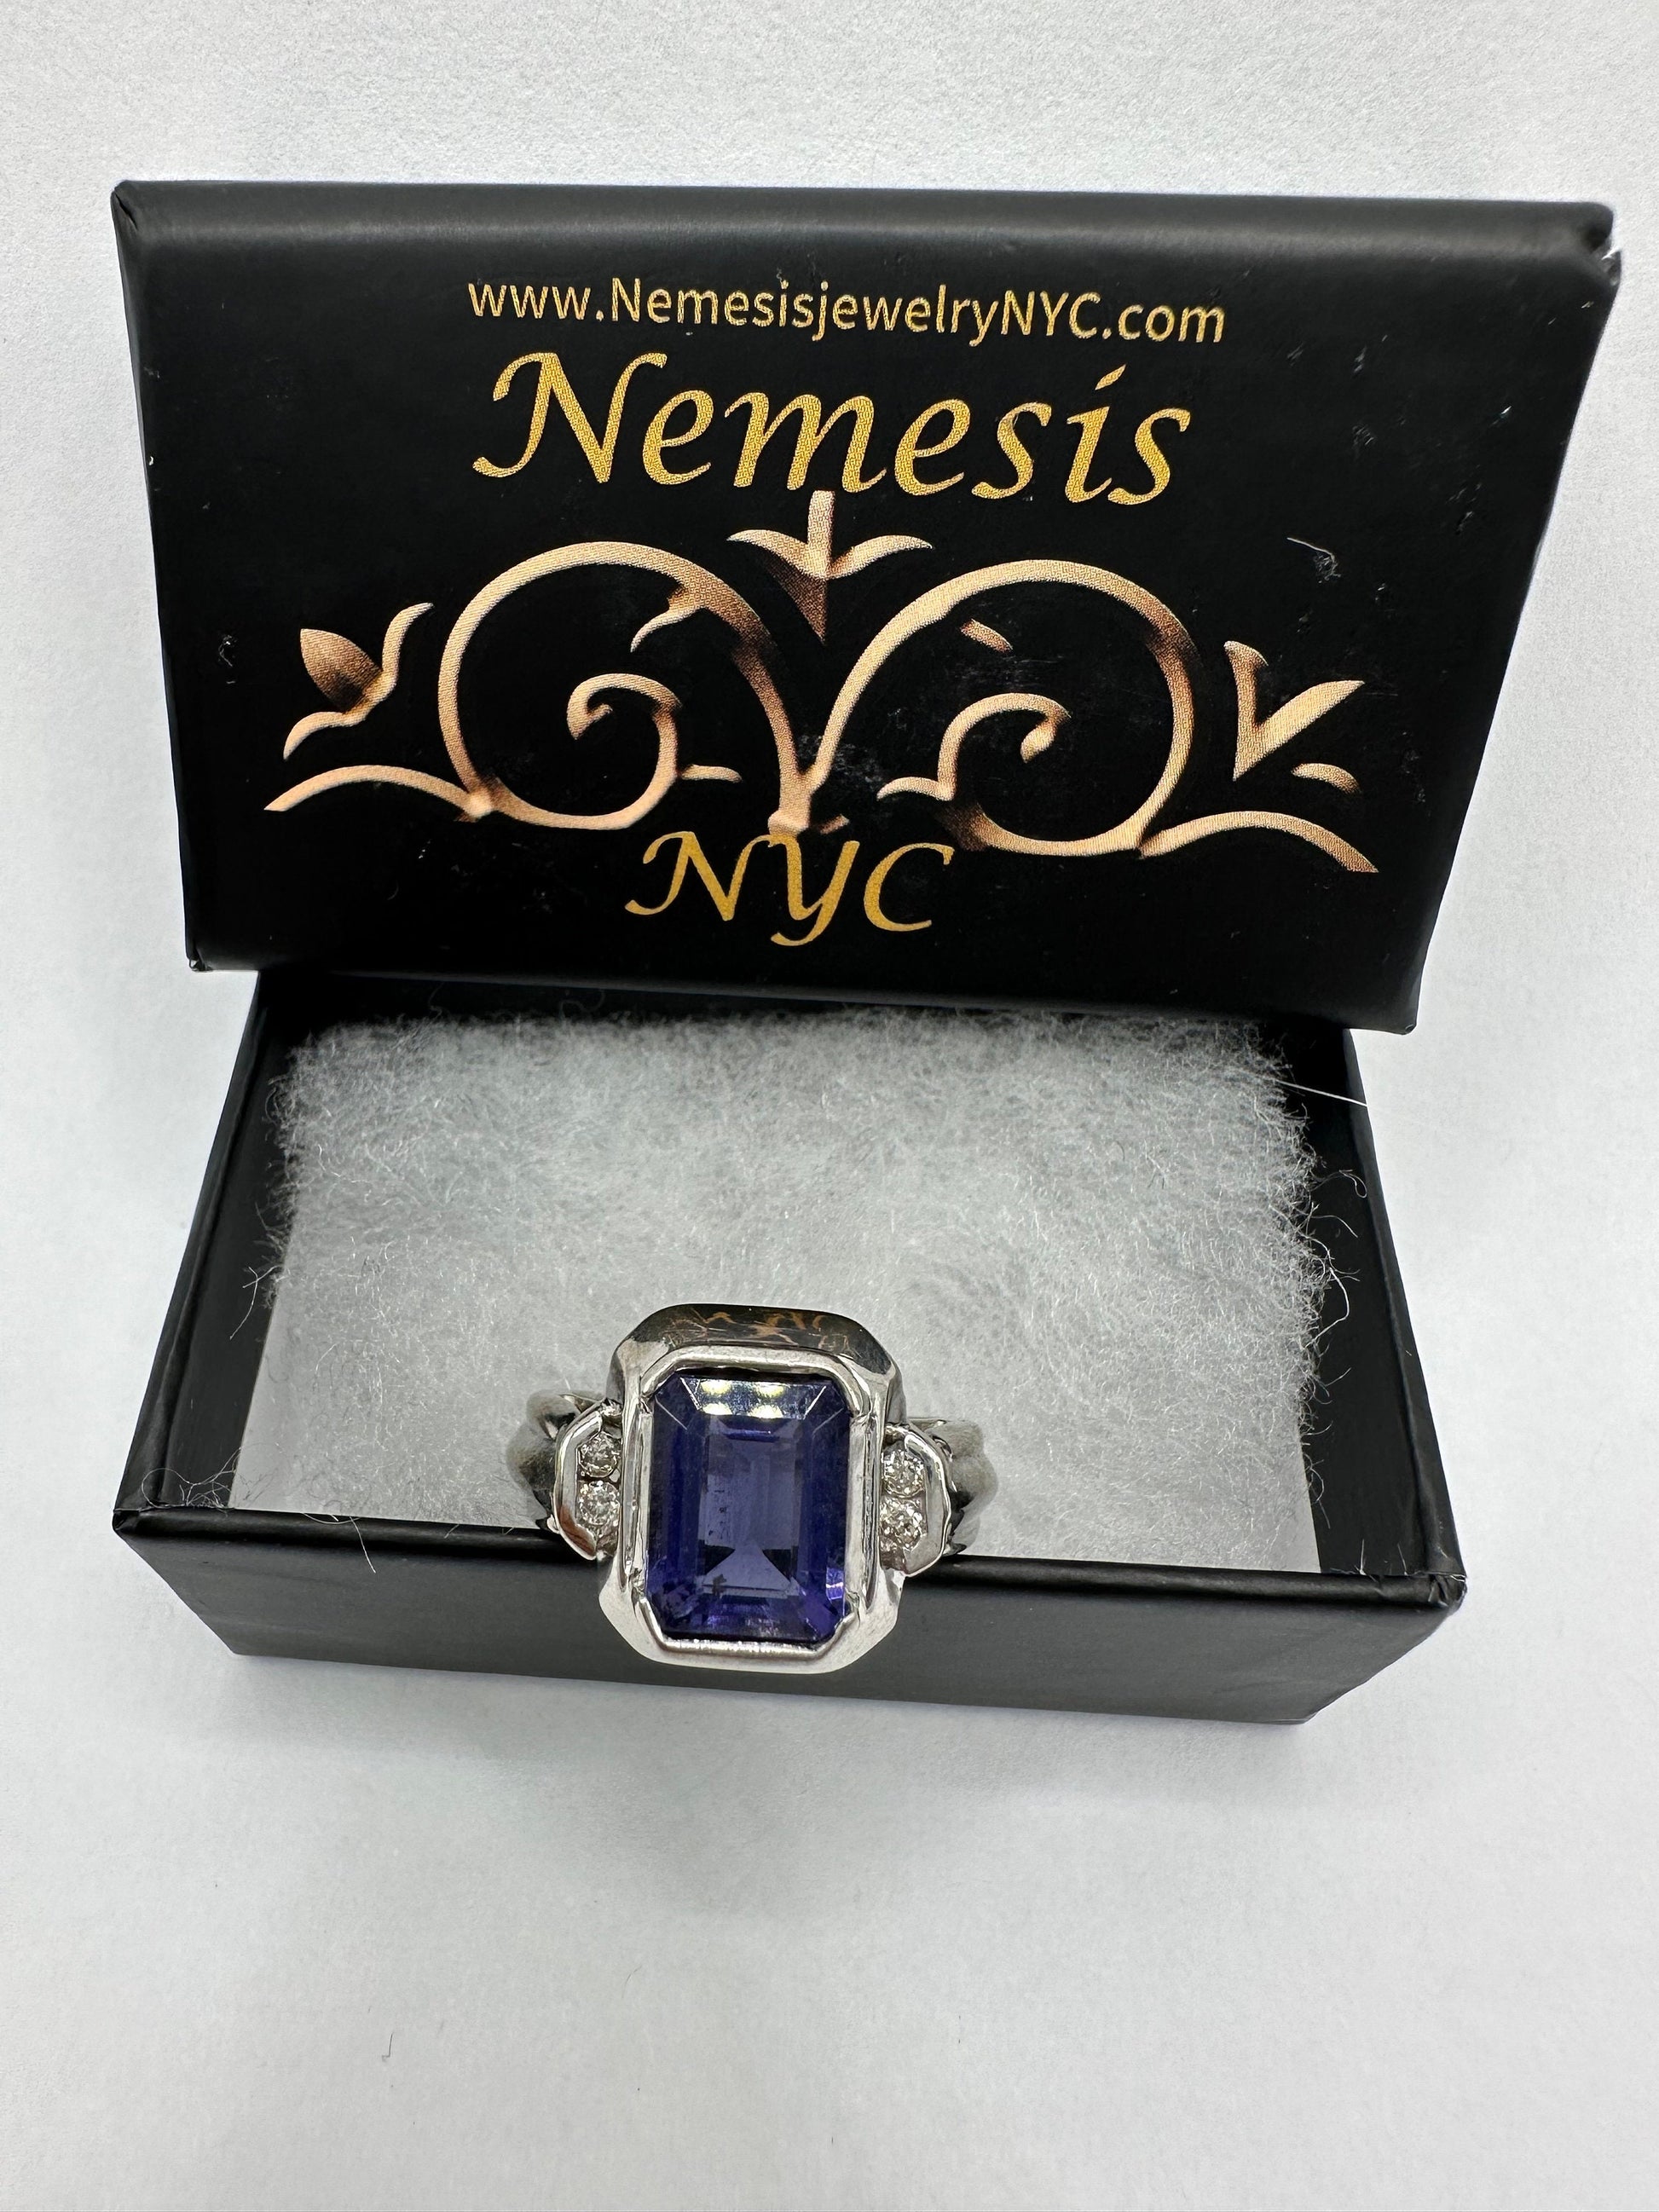 Vintage Deep Blue Iolite Diamond 14k White Gold Deco Ring Size 8